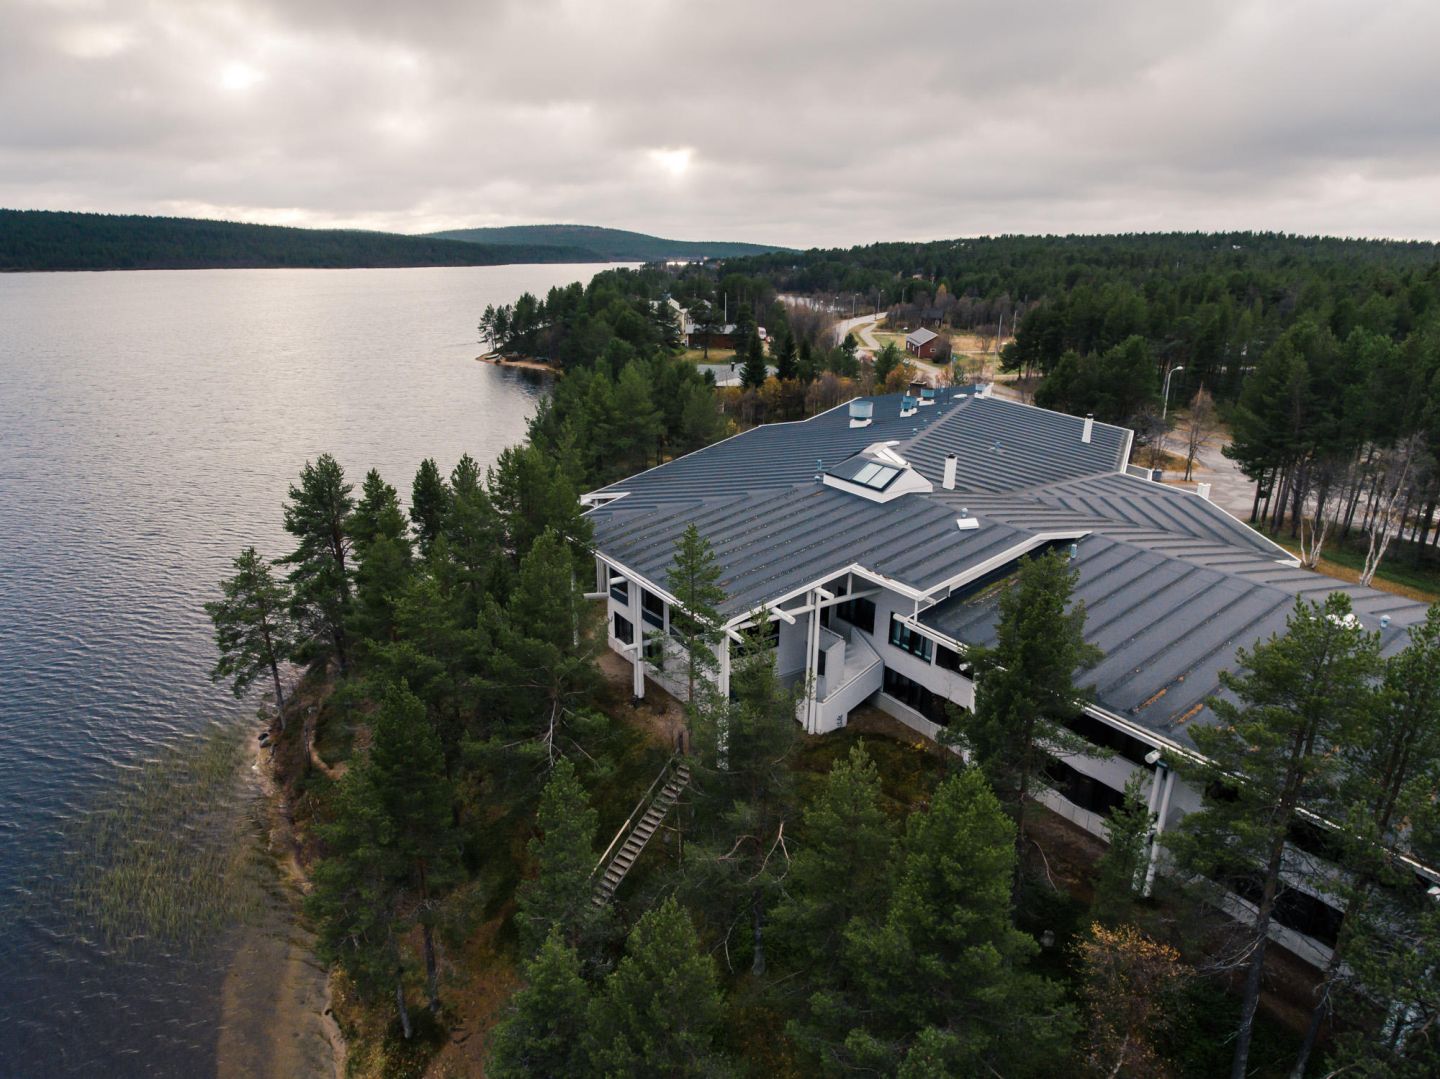 Lapland Hotels in Enontekiö, Finland